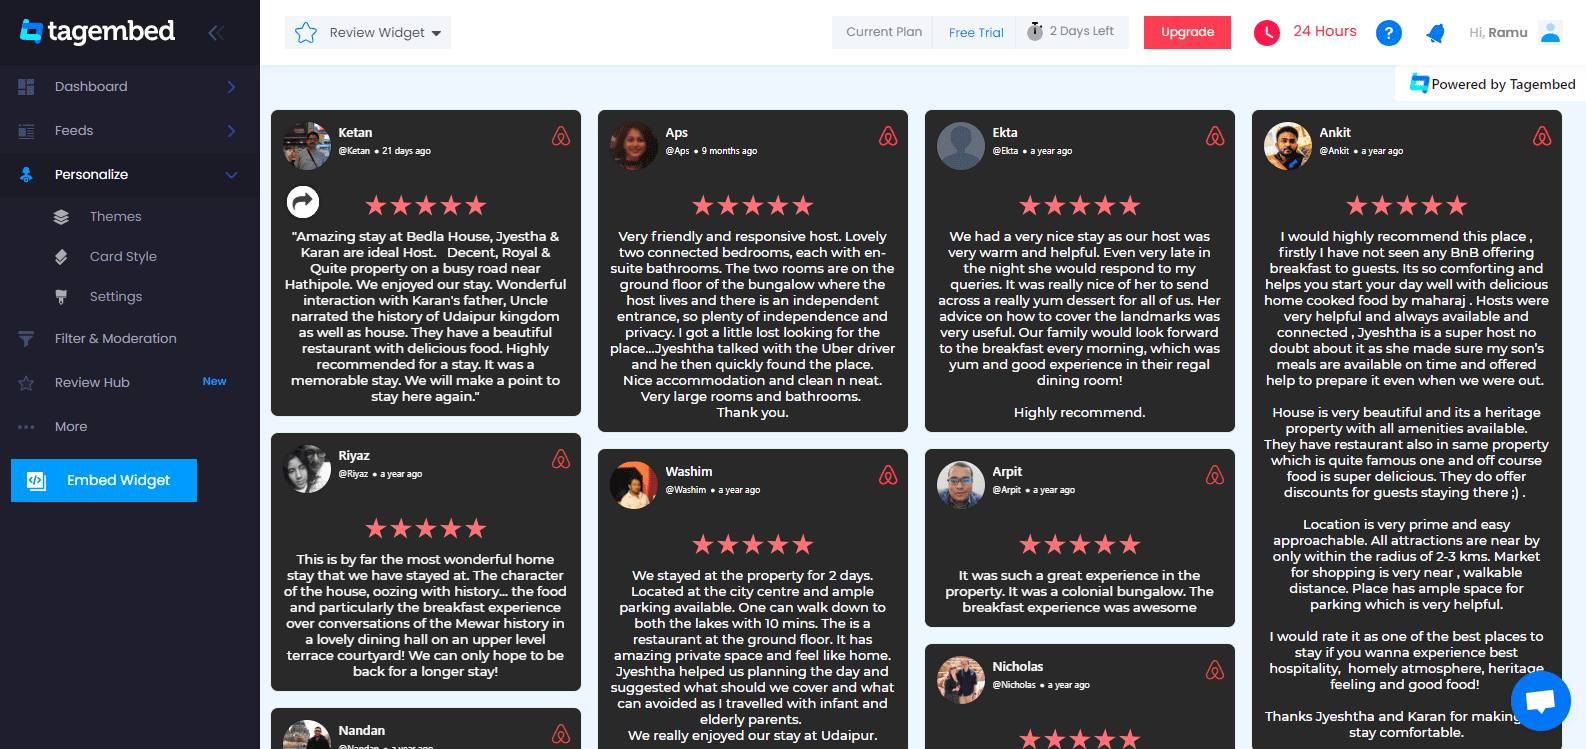 Display airbnb reviews
